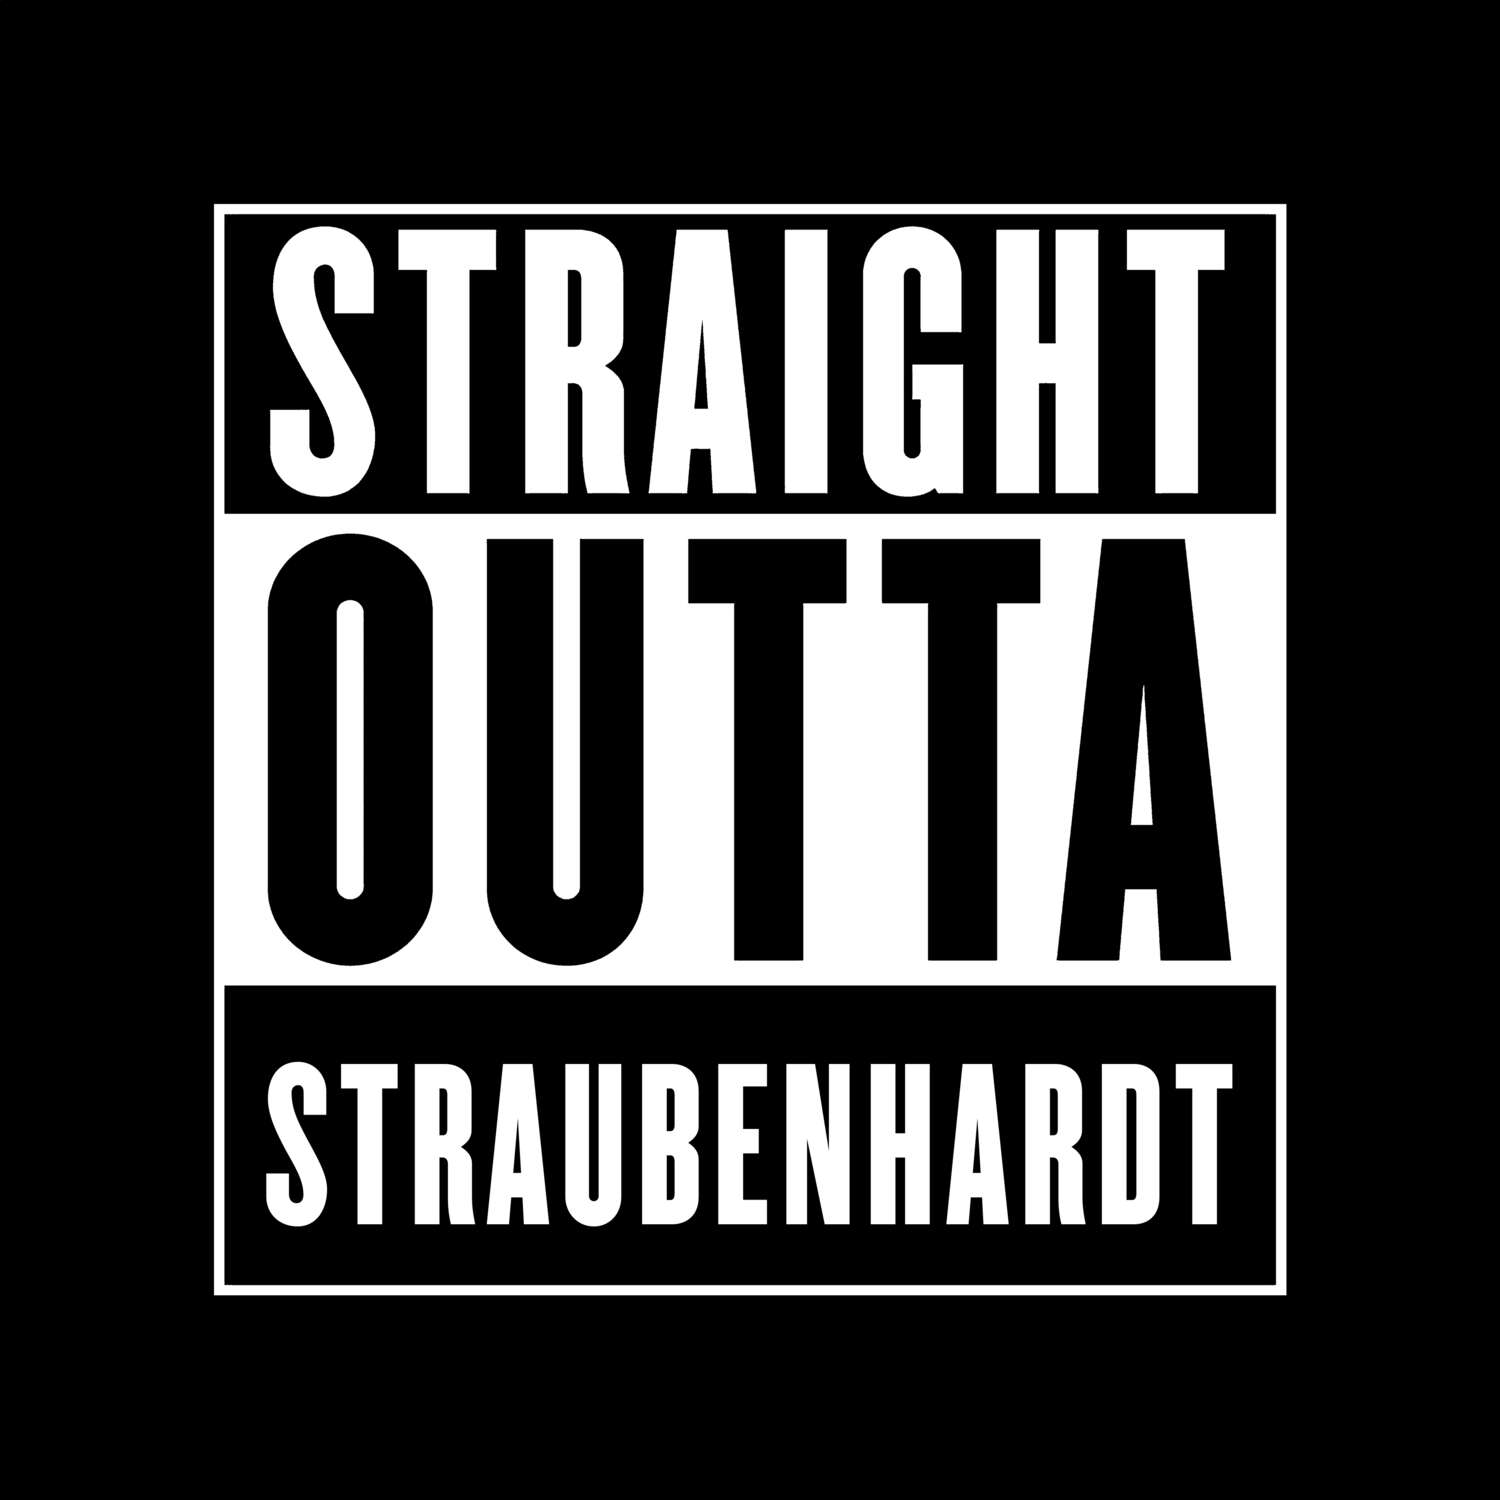 Straubenhardt T-Shirt »Straight Outta«